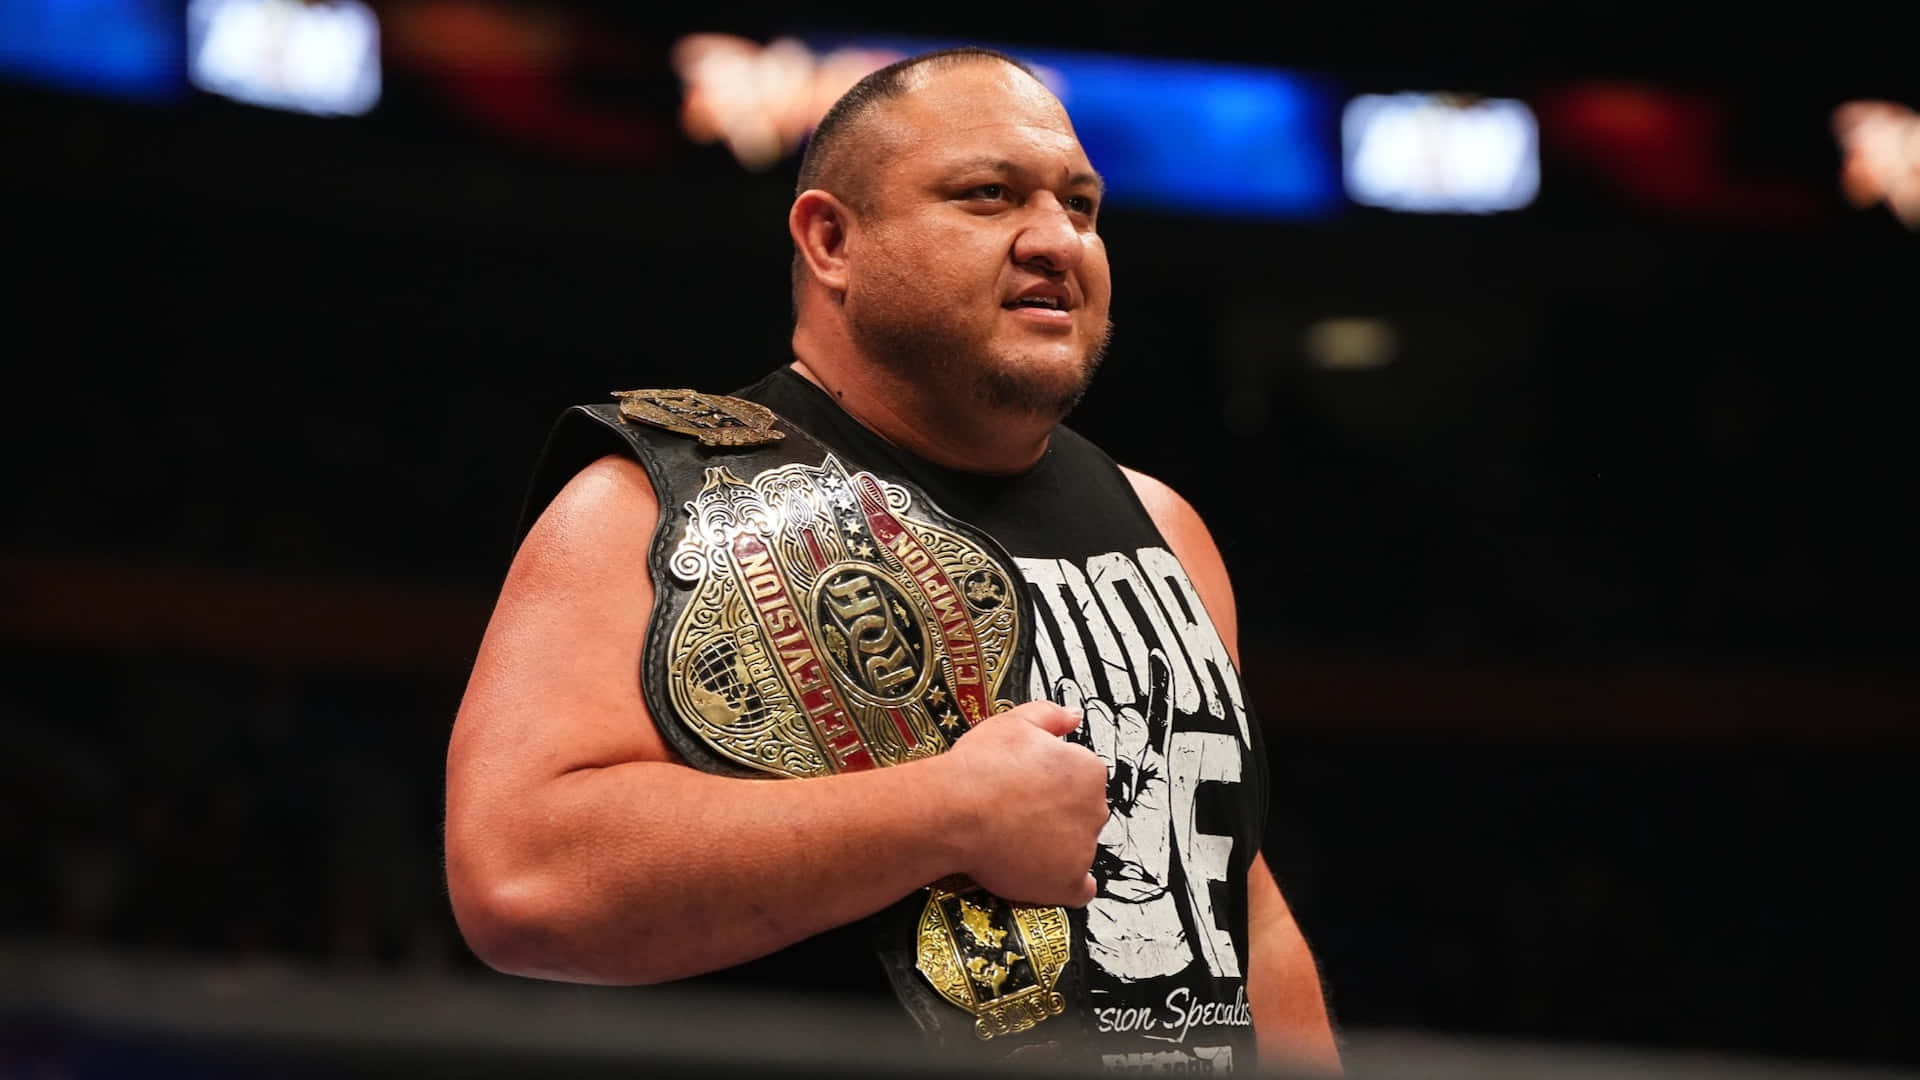 Samoa Joe Aew Championship Belt